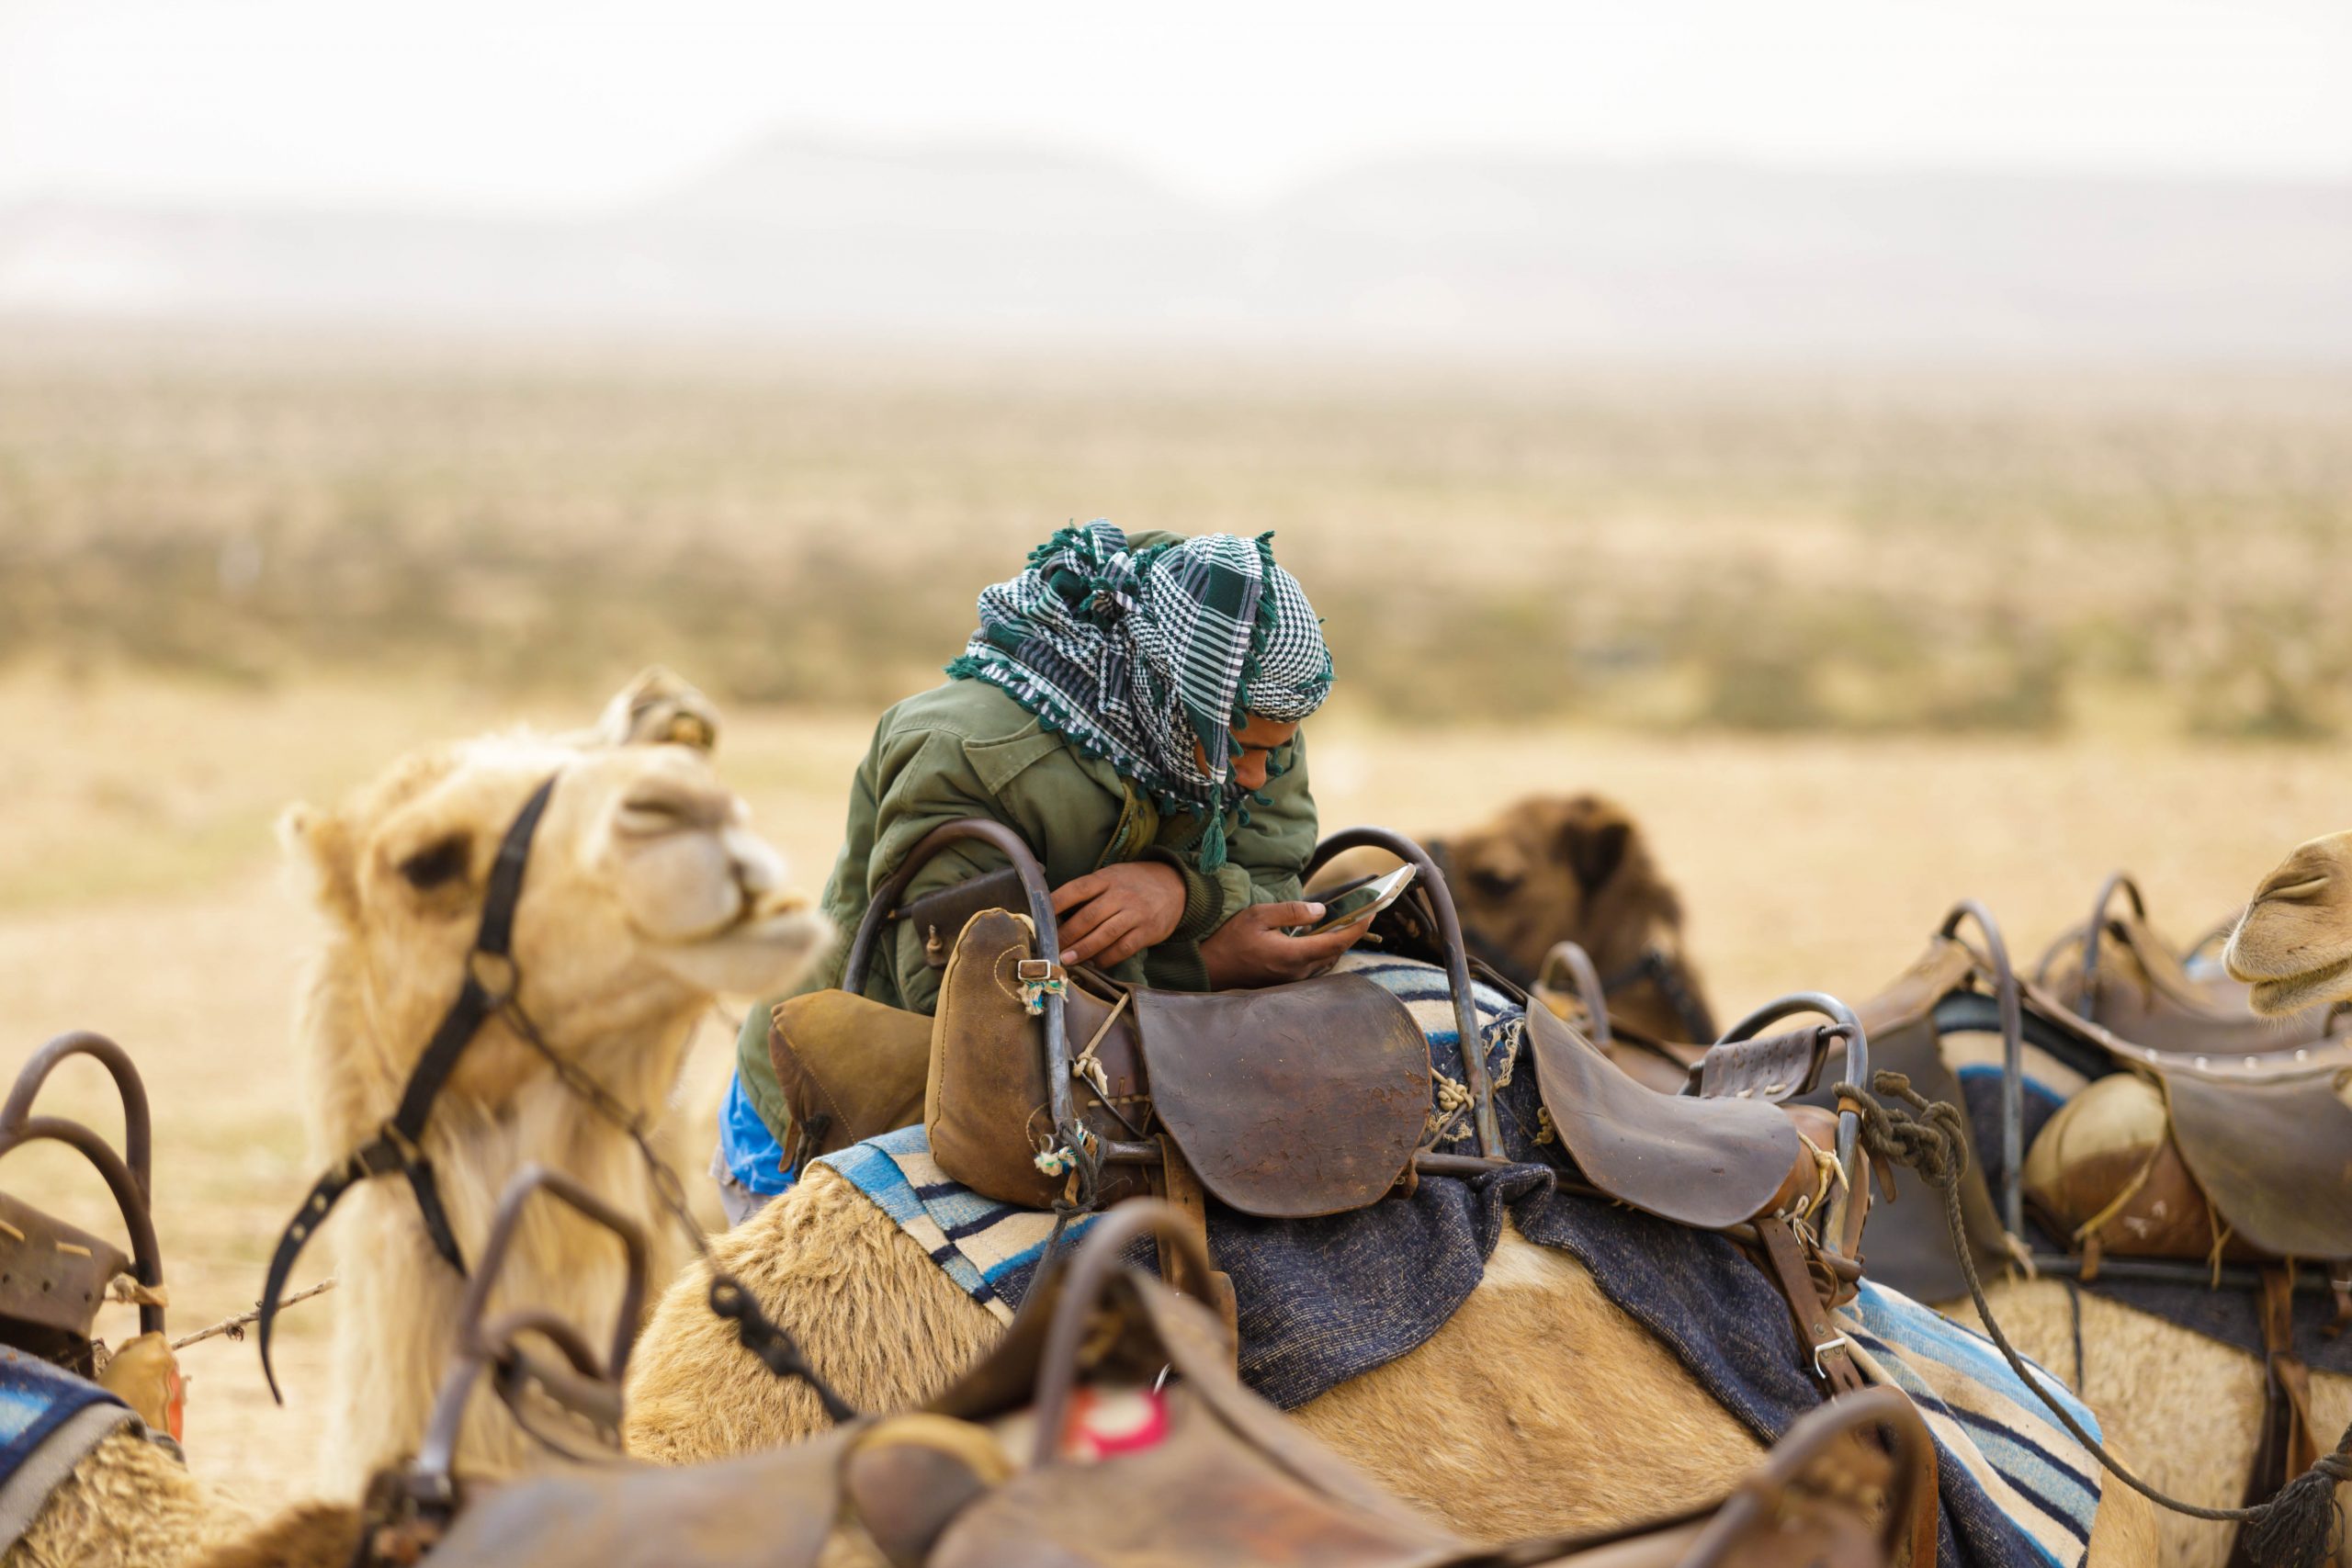 Bedouin, Camel, Desert, גמל, בדואי, טלפון